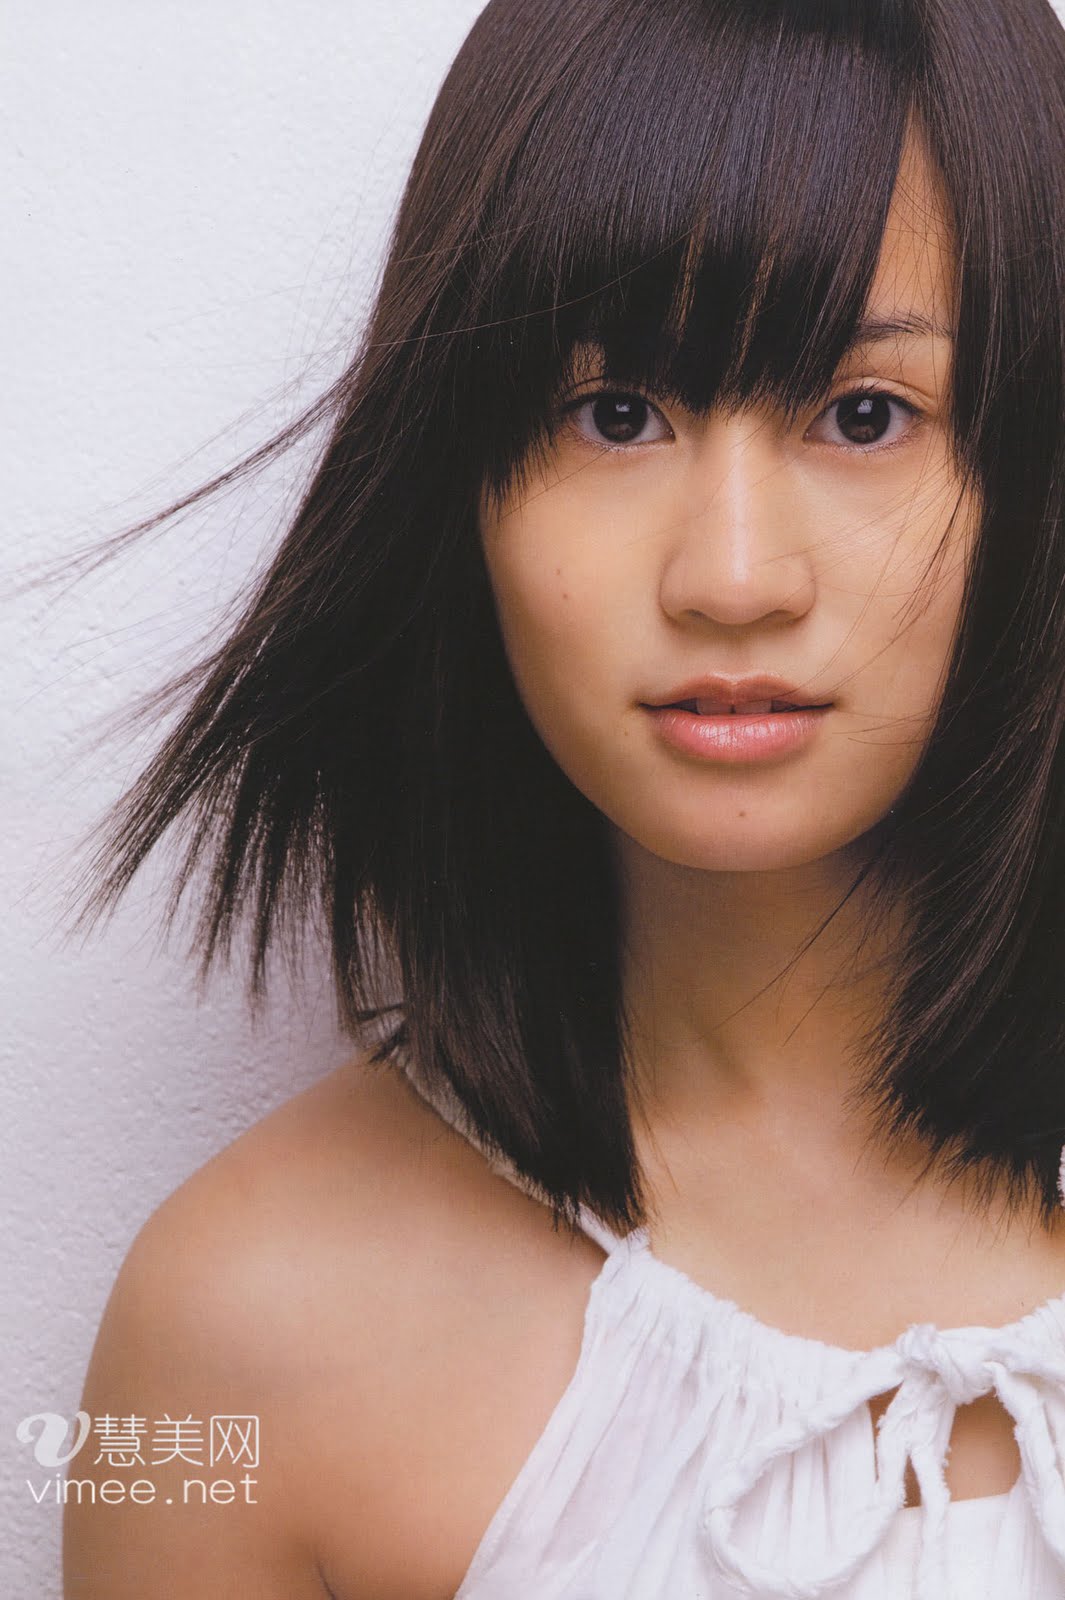 Maeda Atsuko - Wallpaper Actress